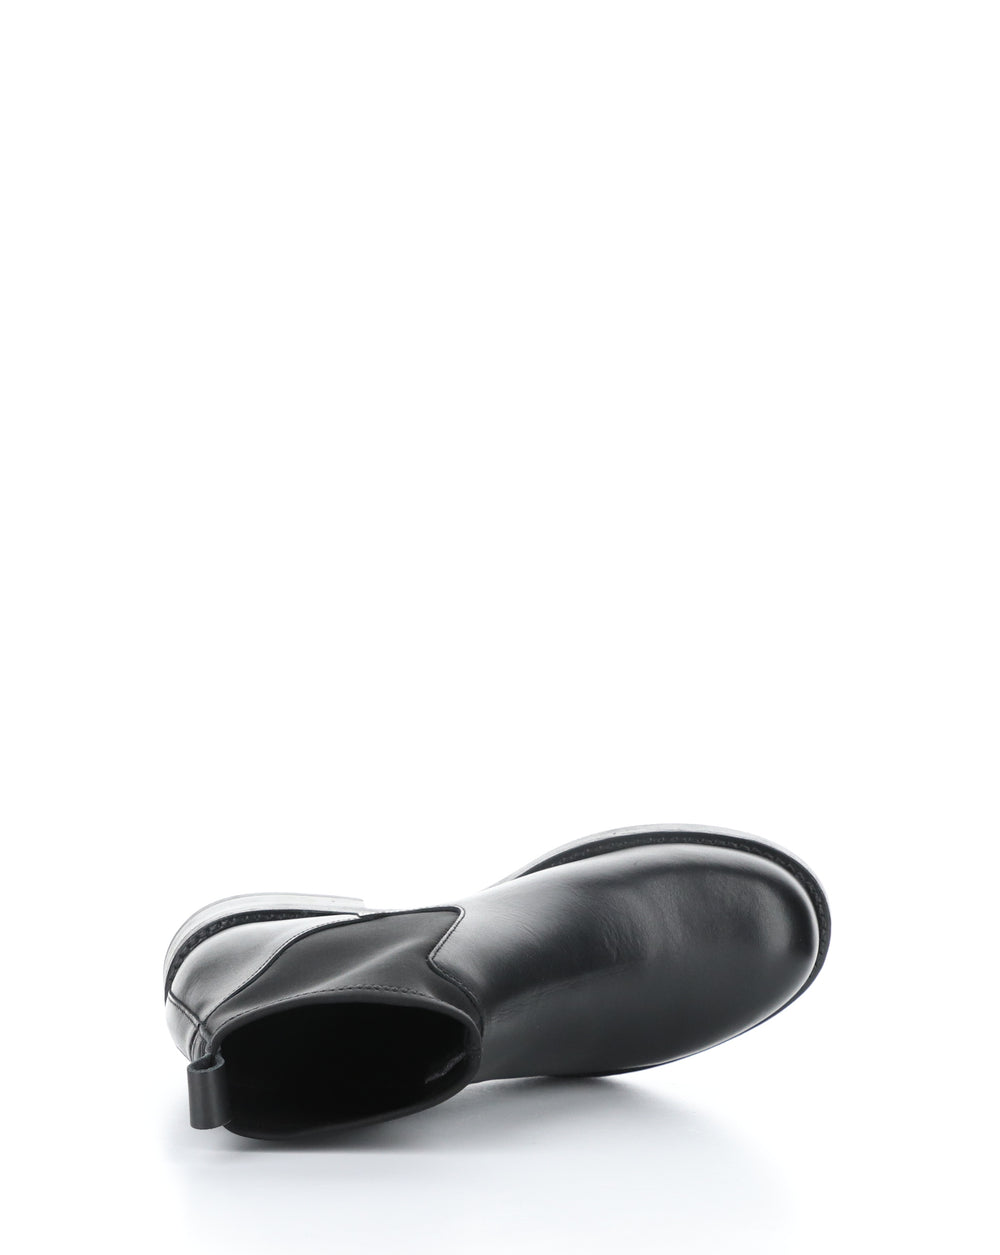 NOEL BLACK Elasticated Boots